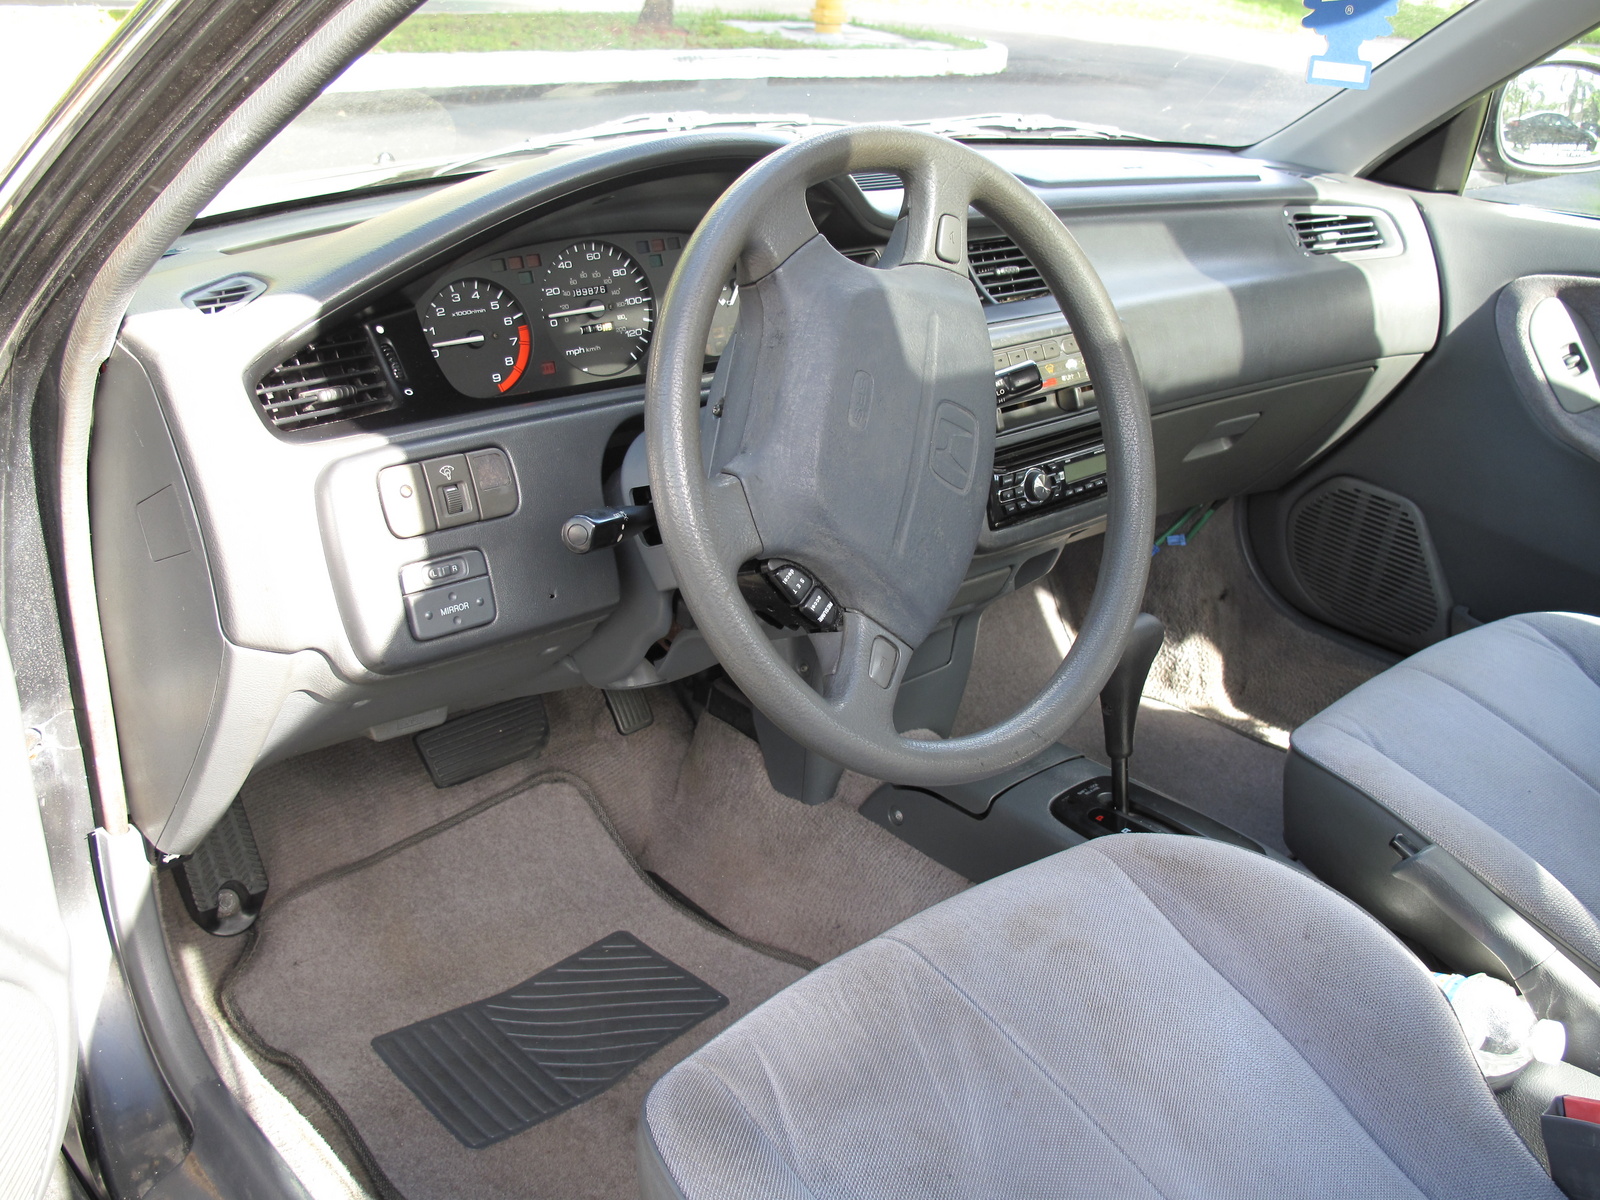 1995 Honda civic dx interior #4